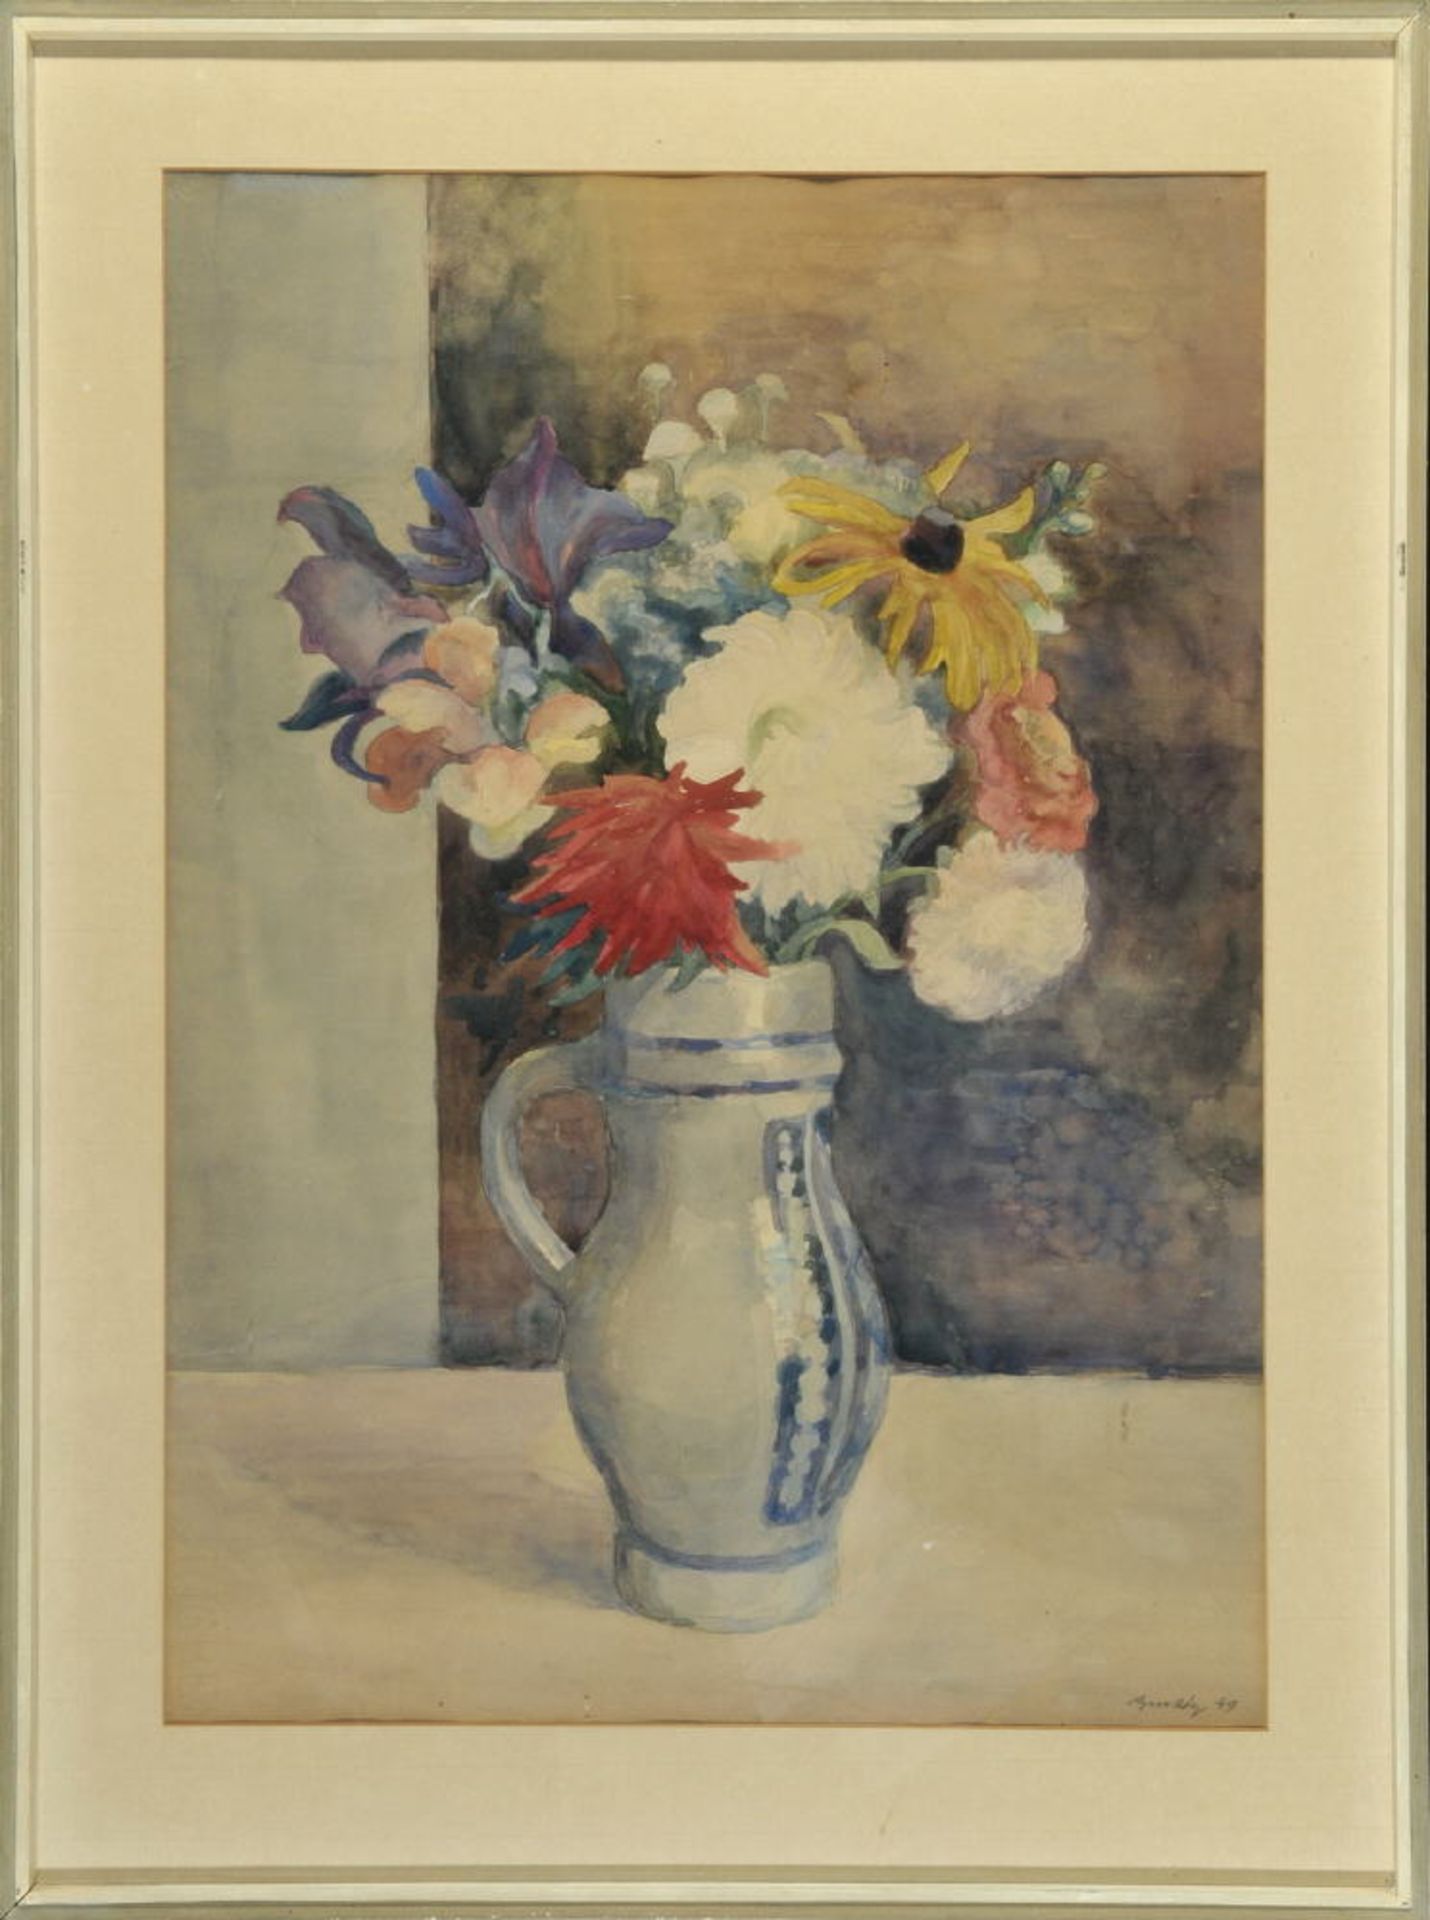 Buchty, Josef, 1896 Aachen - 1966 Garmisch-PartenkirchenAquarell, 59 x 43 cm, " Bunte Blumen in